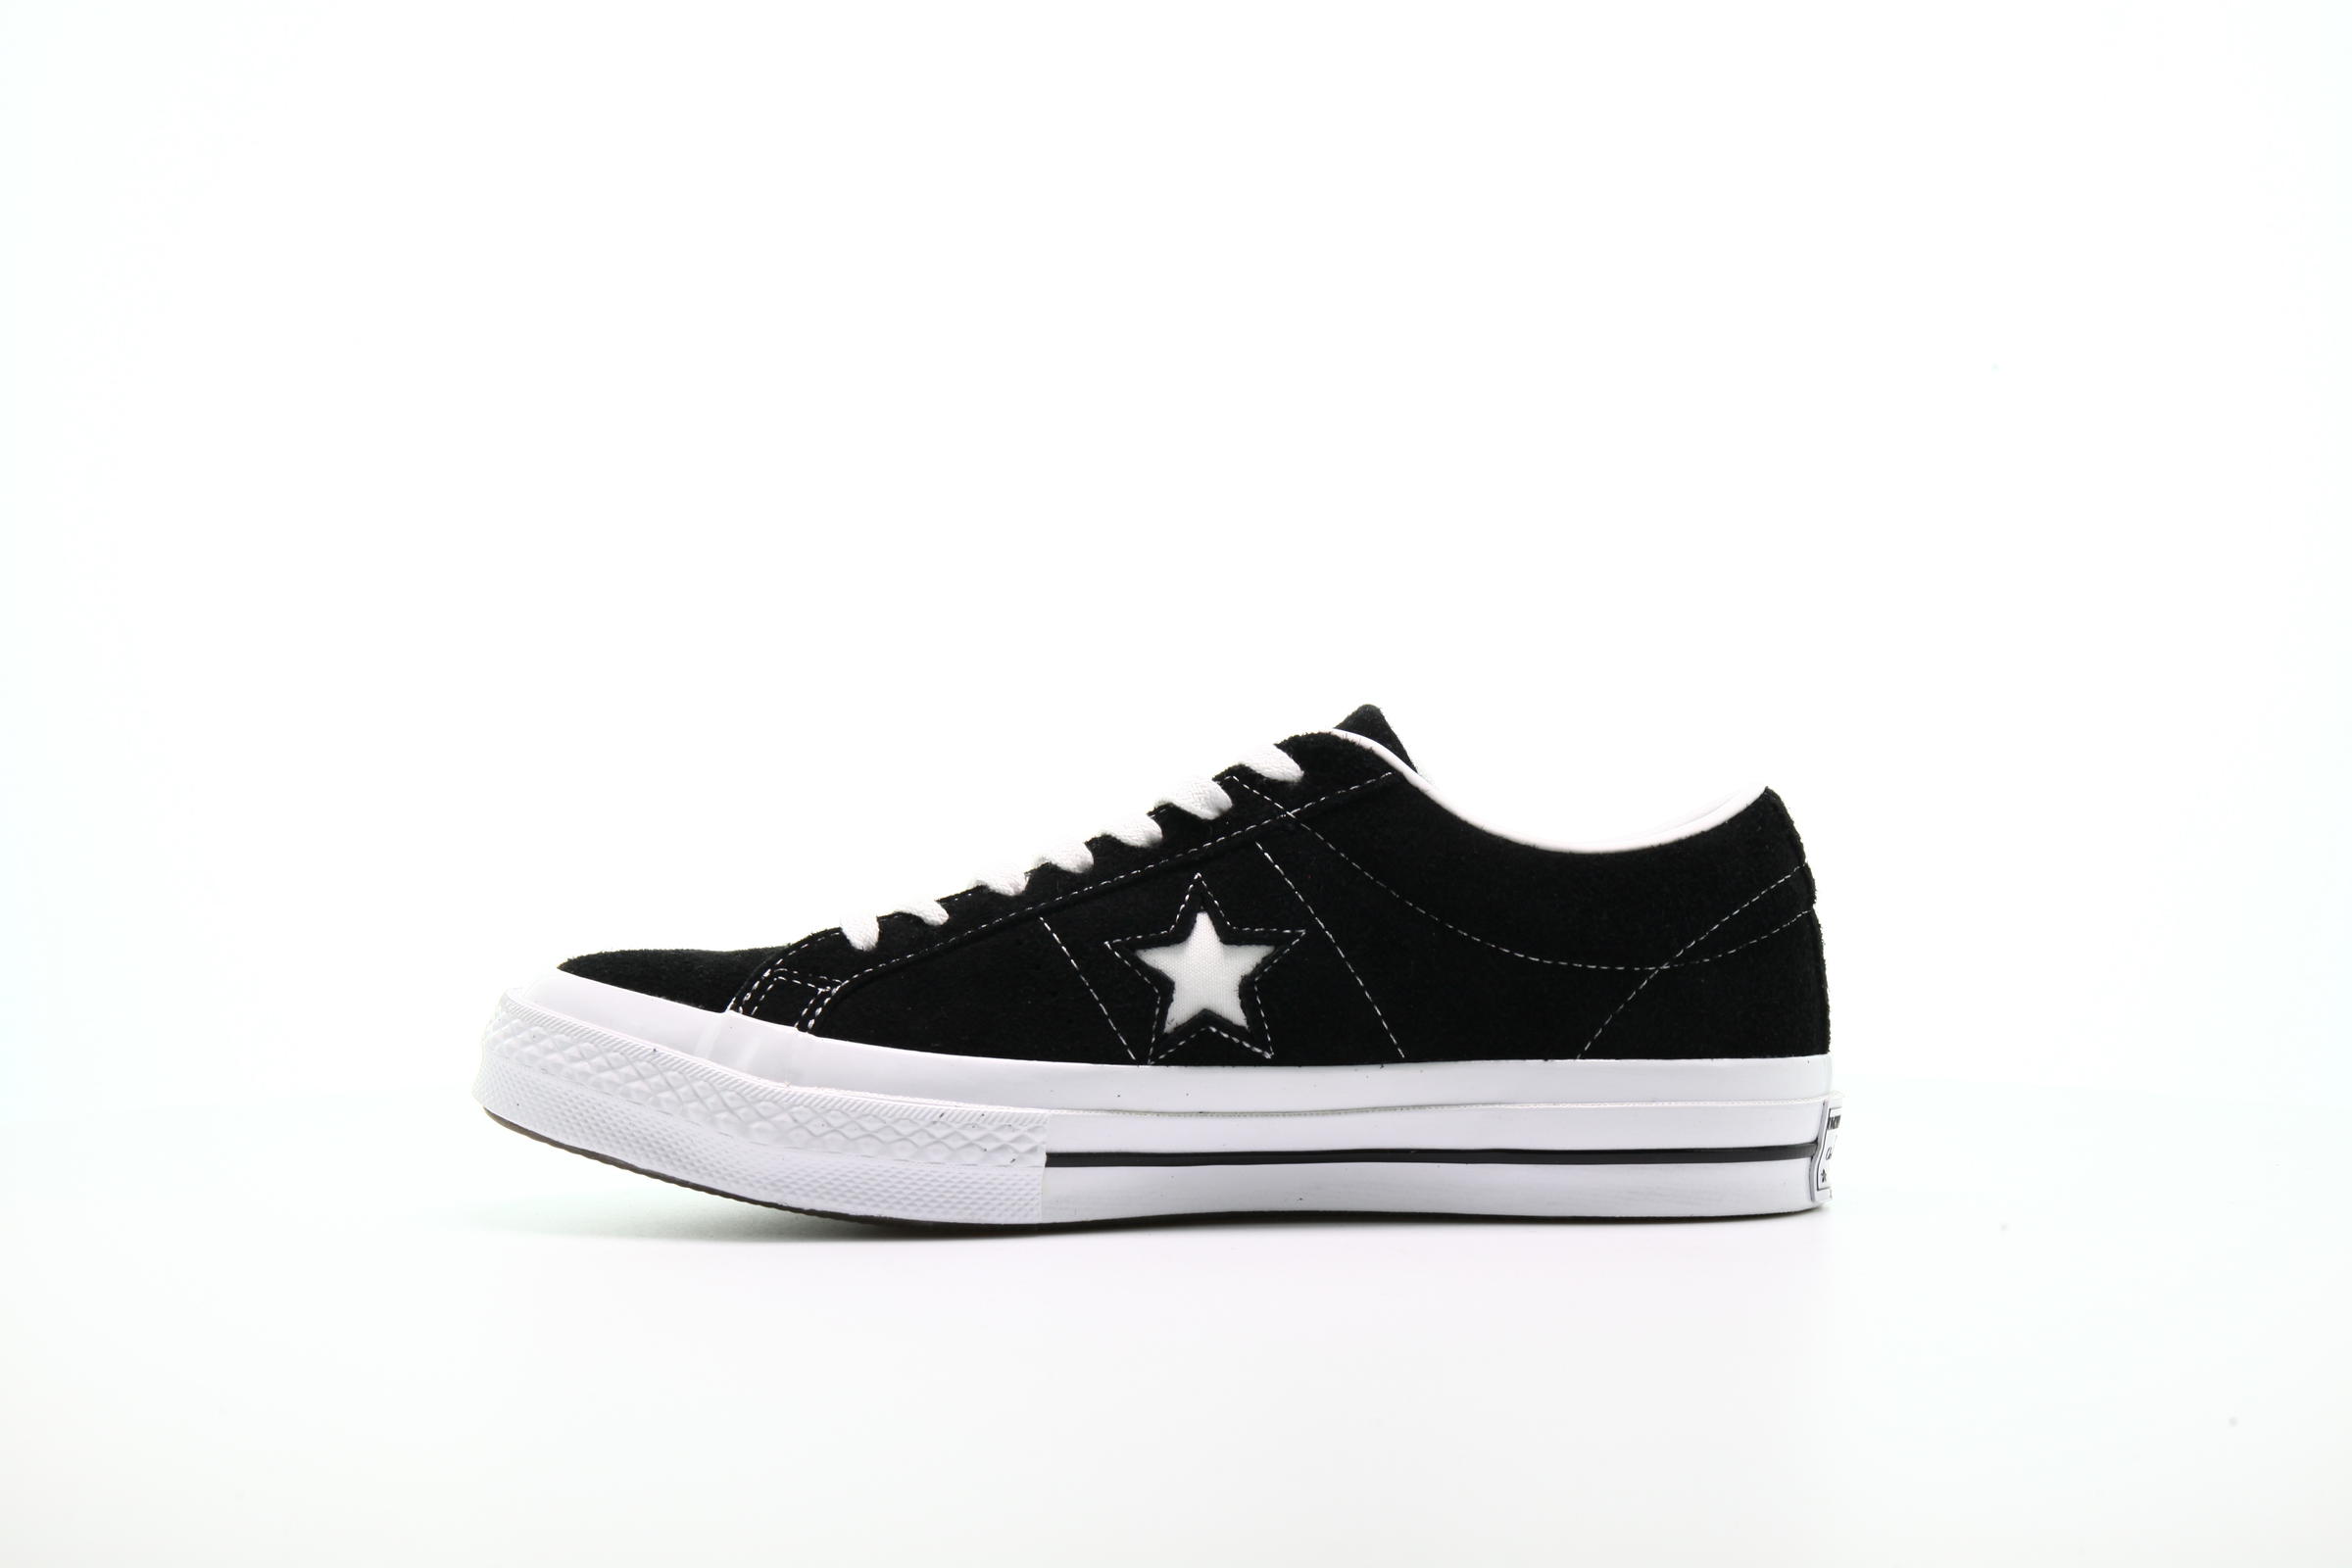 Converse One Star Premium Suede OX "Black"